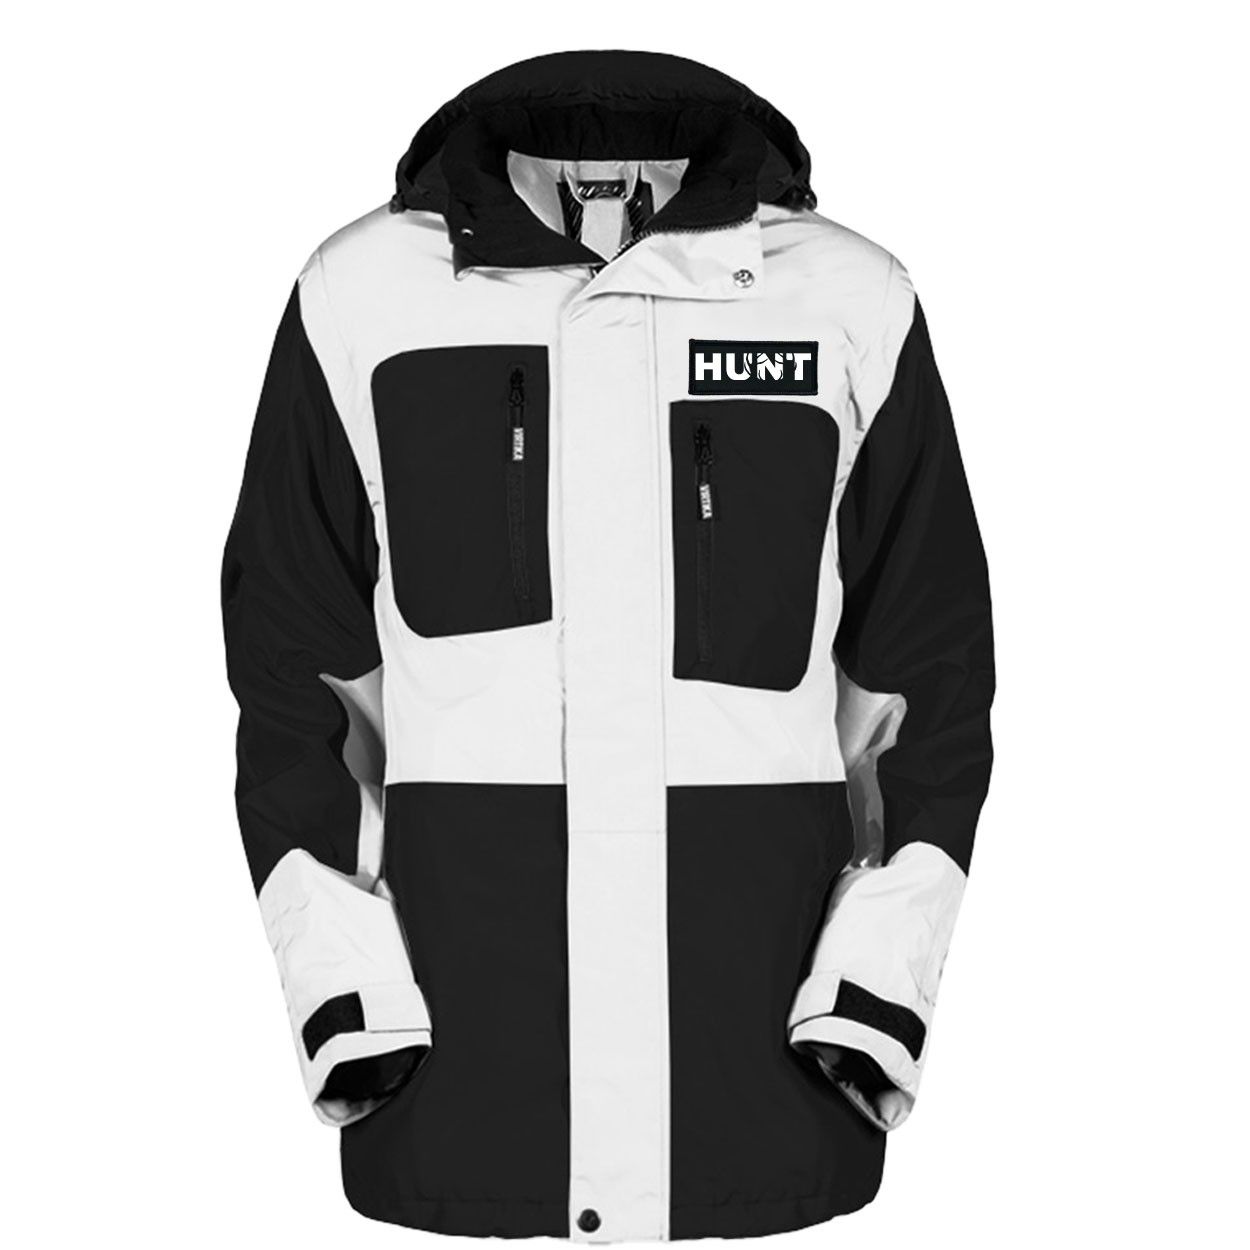 Hunt Rack Logo Pro Waterproof Breathable Winter Virtika Jacket Black/White (White Logo)